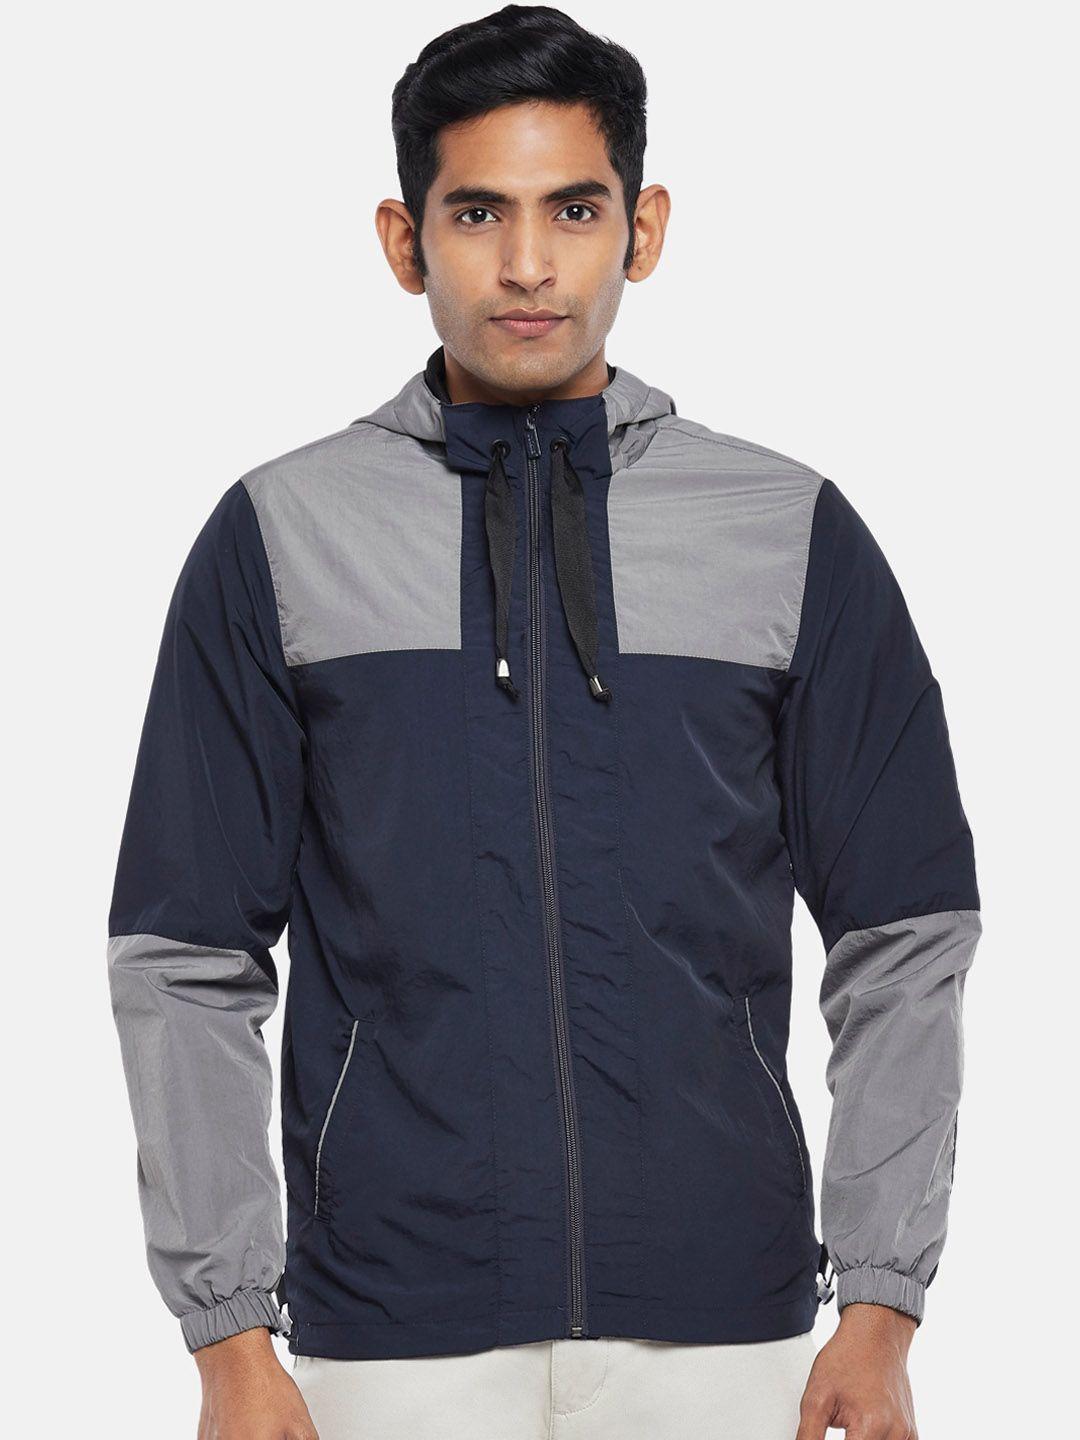 byford-by-pantaloons-men-navy-blue-grey-colourblocked-outdoor-sporty-jacket